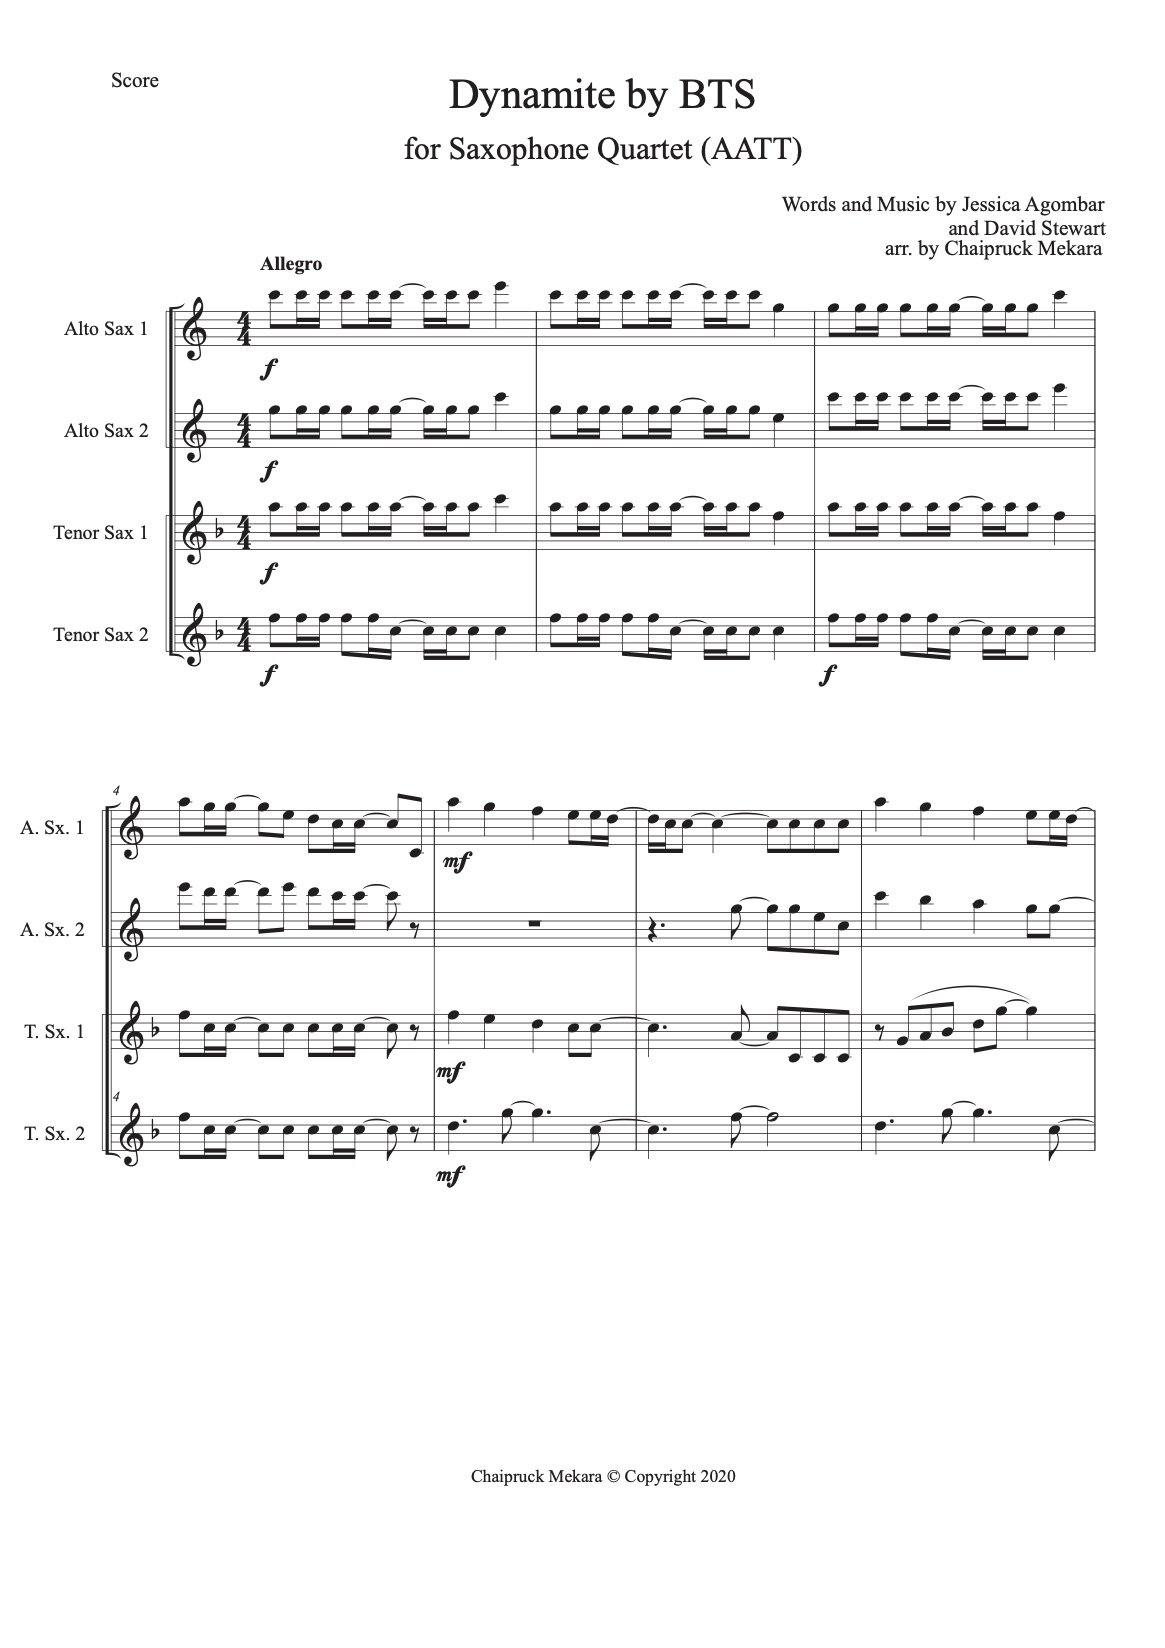 Saxophone Quartet sheet music (AATT): BTS Dynamite - ChaipruckMekara